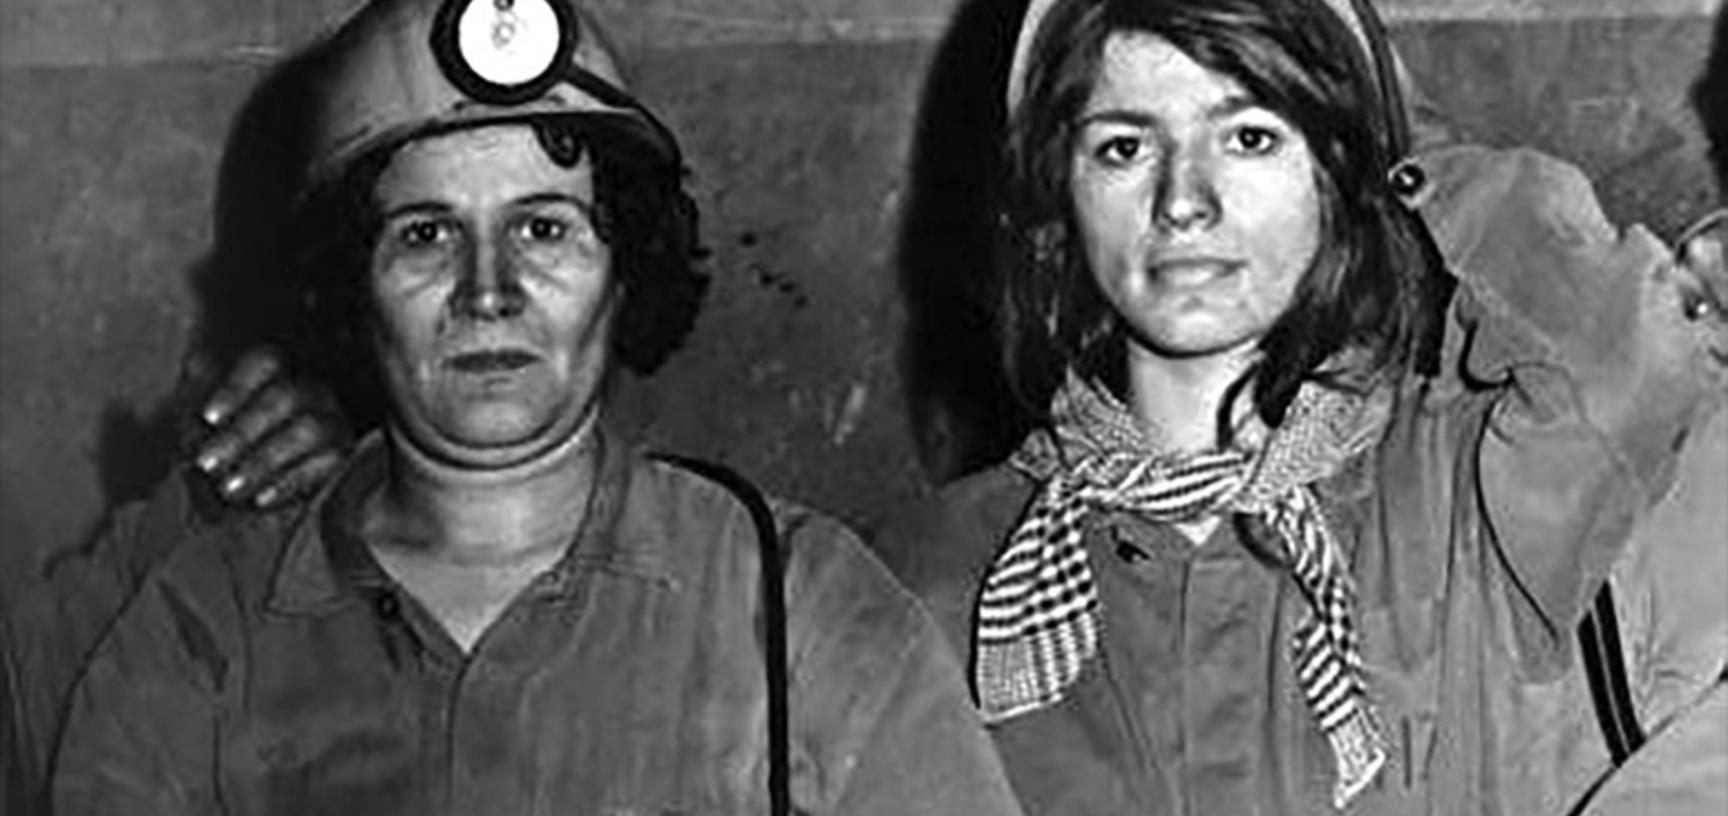 Two women miners